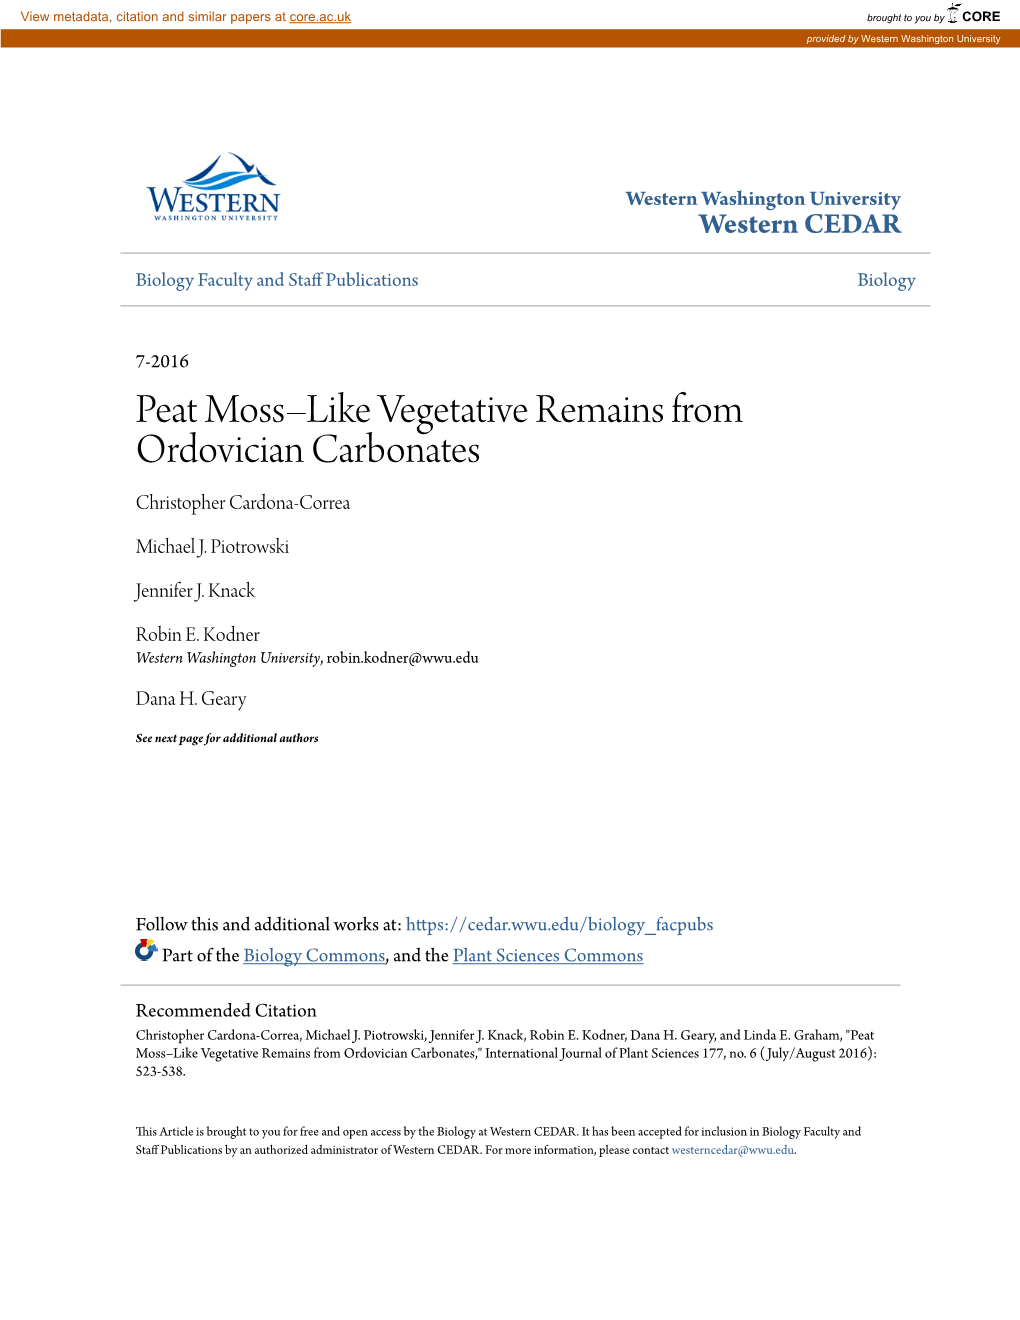 Peat Moss–Like Vegetative Remains from Ordovician Carbonates Christopher Cardona-Correa